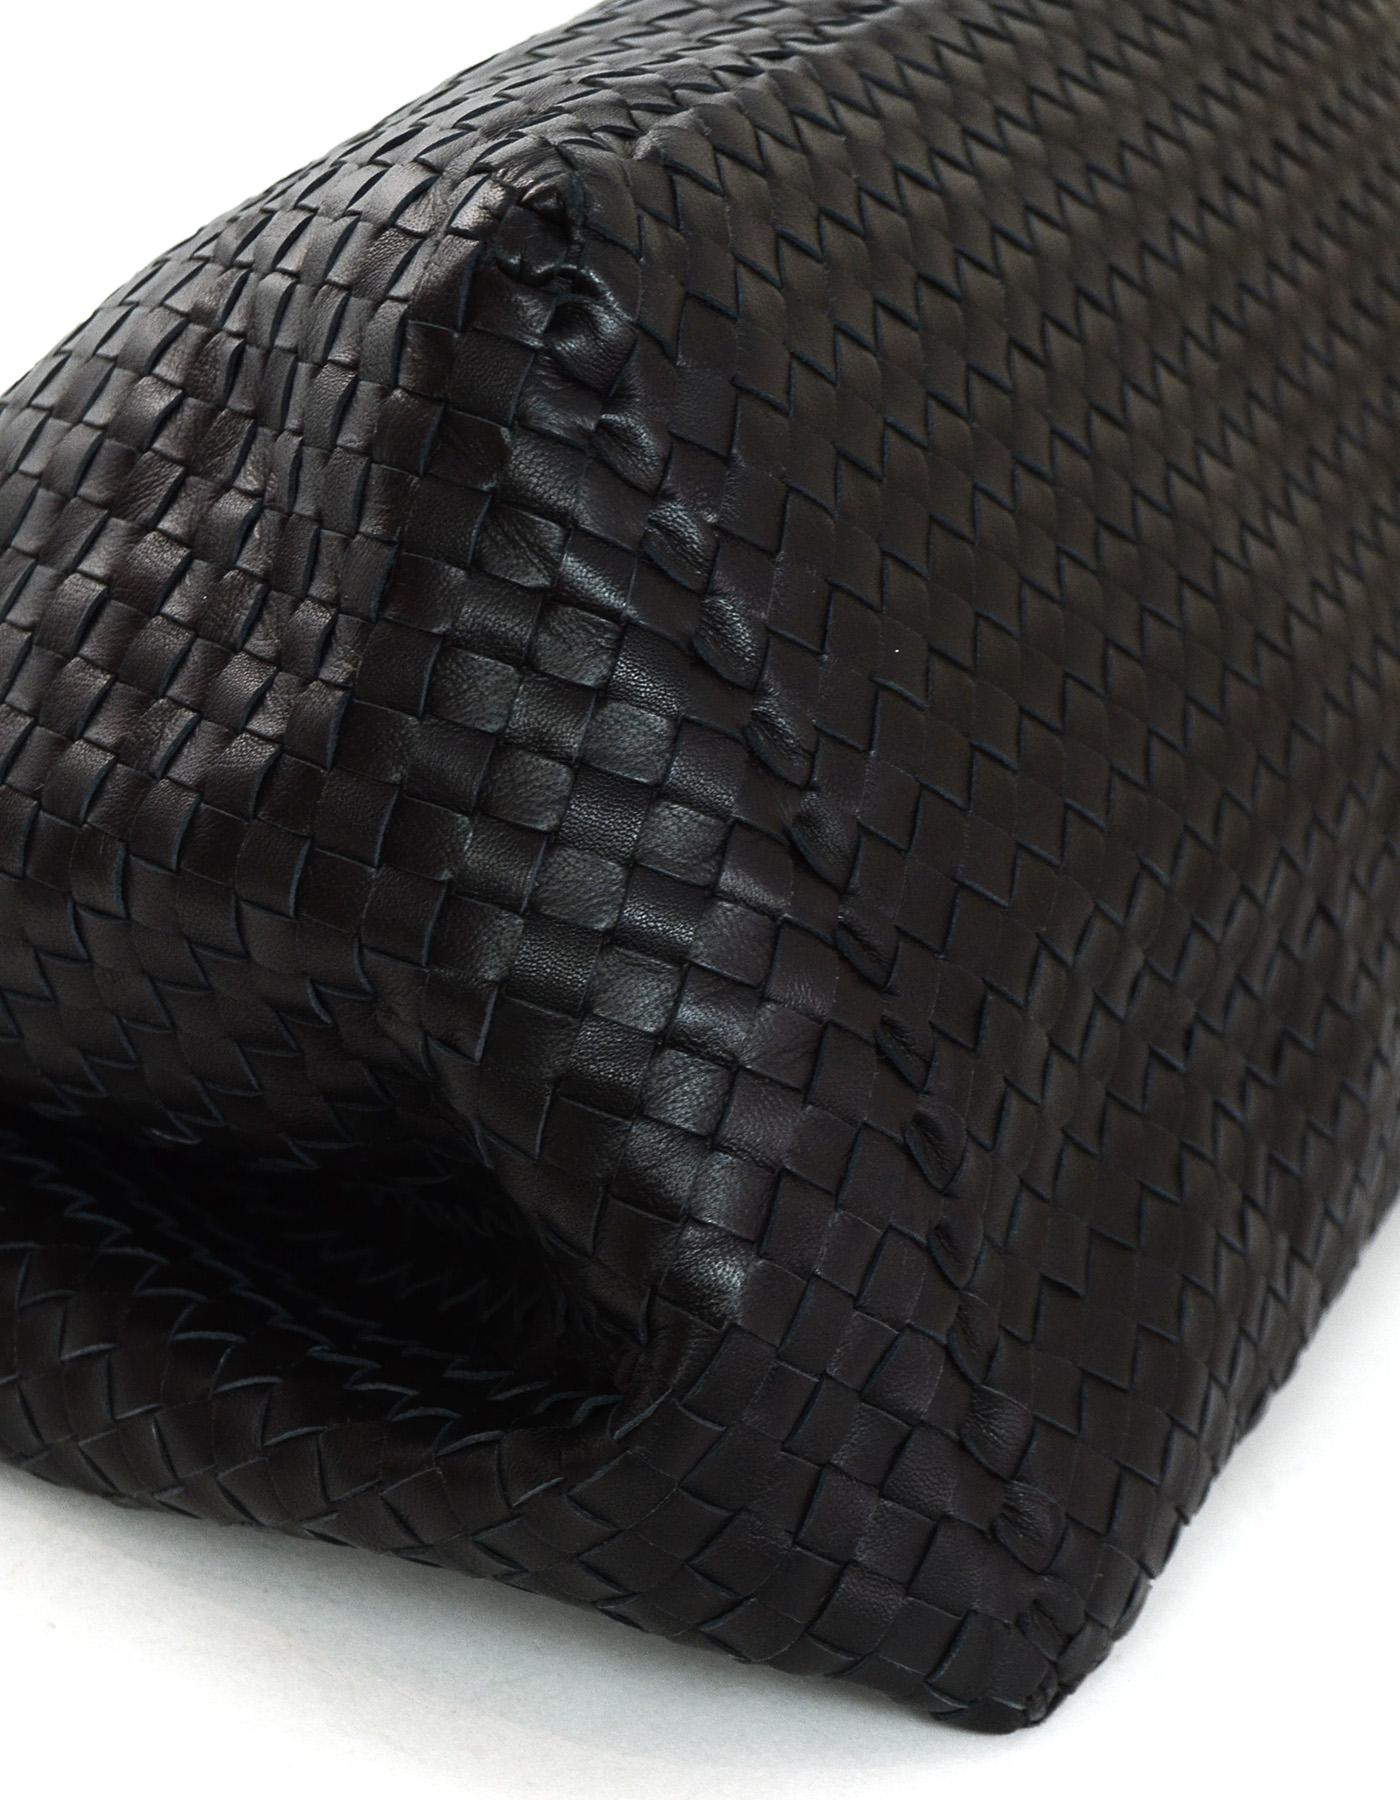 bottega veneta black woven leather bag